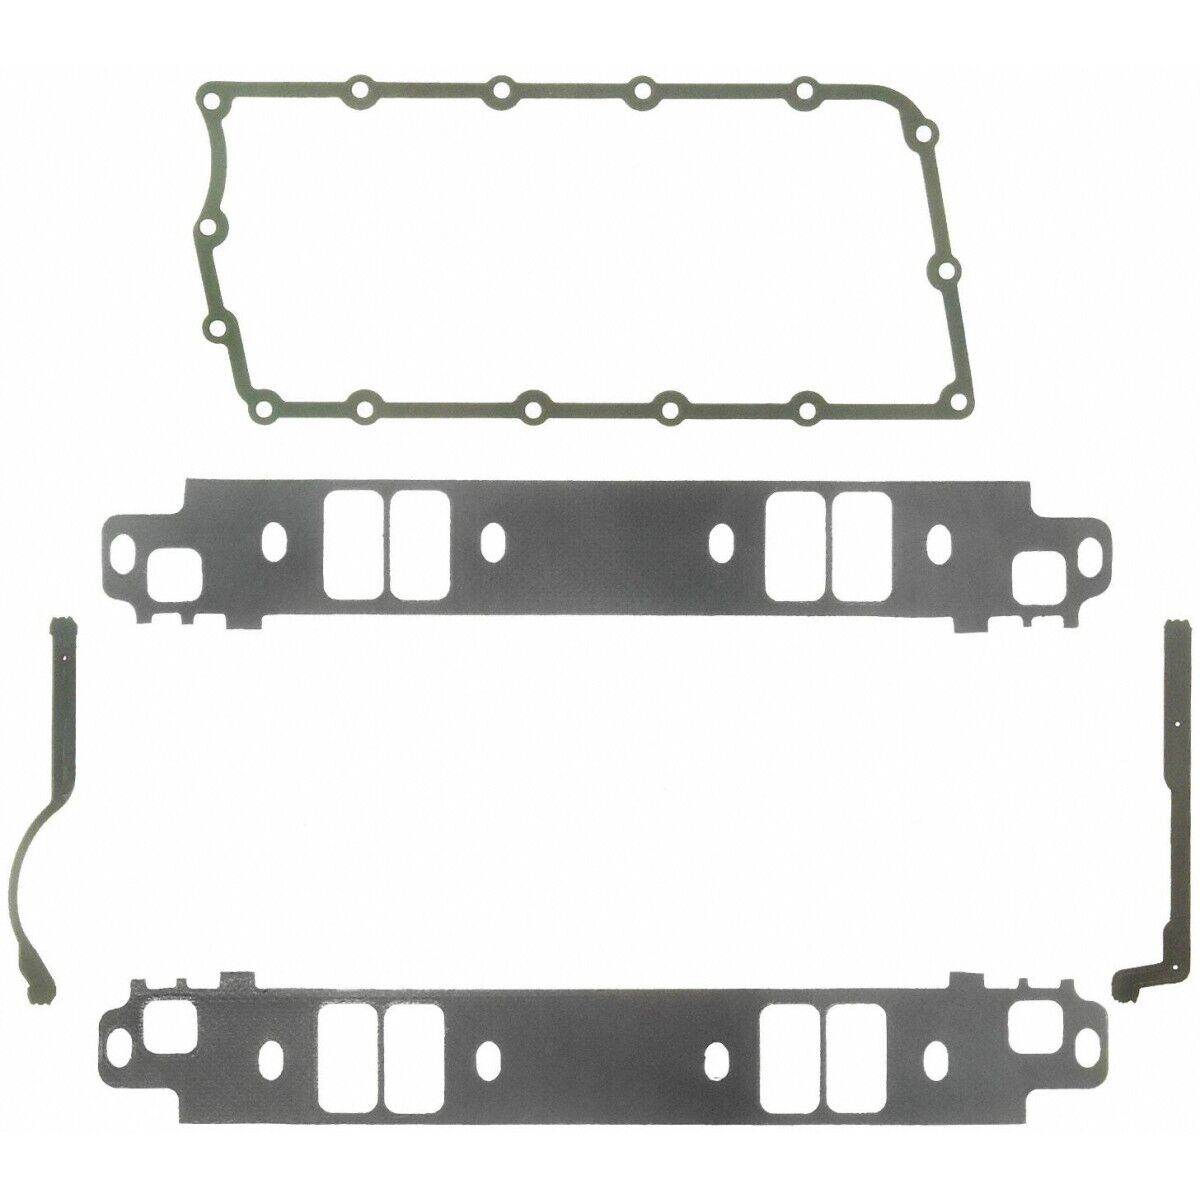 MS 95392-1 Felpro Set Intake Manifold Gaskets for Ram Van Truck Grand Cherokee